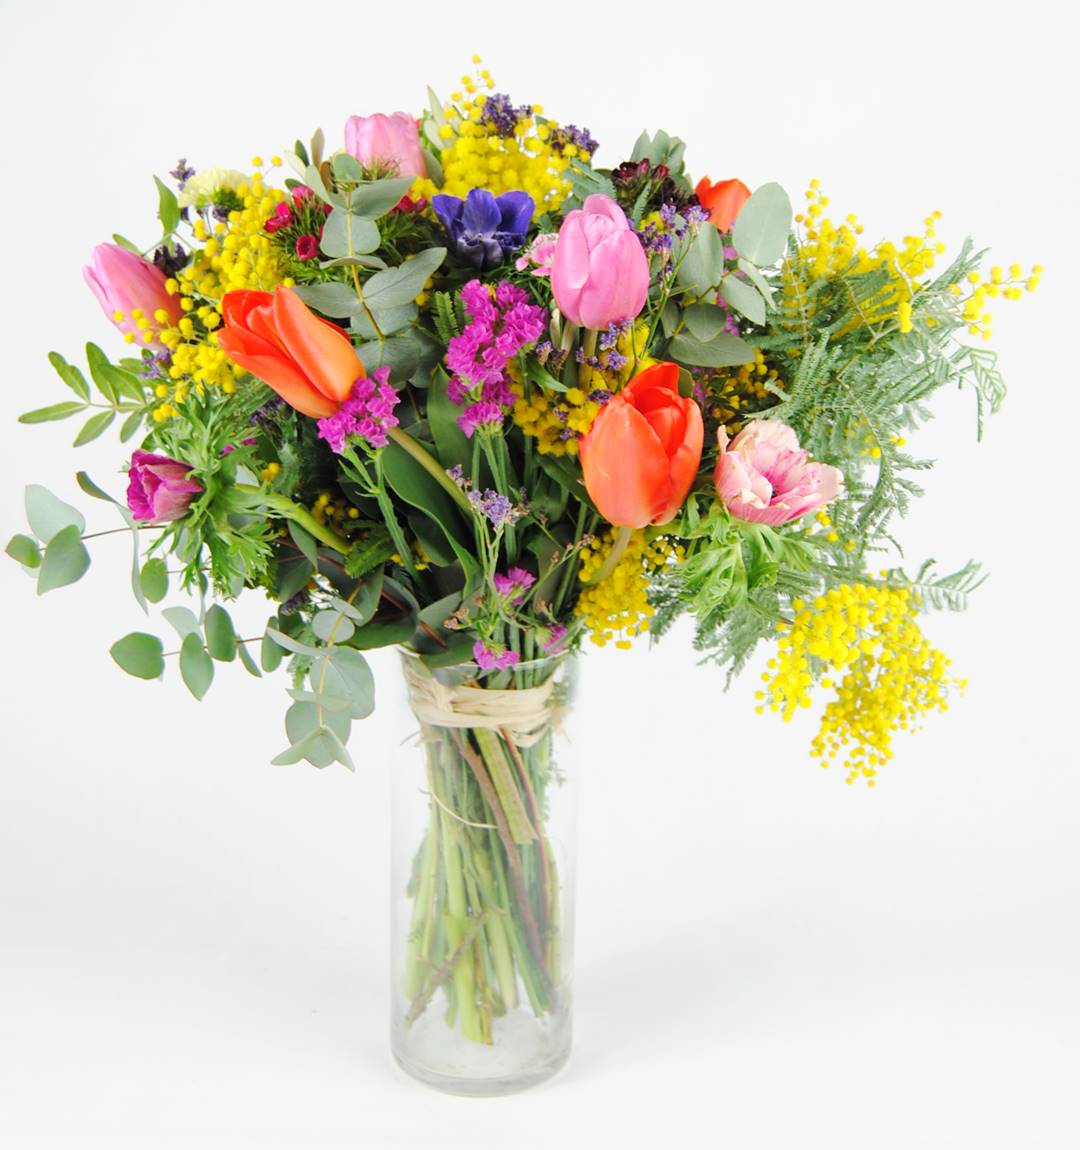 Flores con mimosa, tulipanes, Anemonas, clavel poeta, limonium, estatice, eucalipto y lentisco